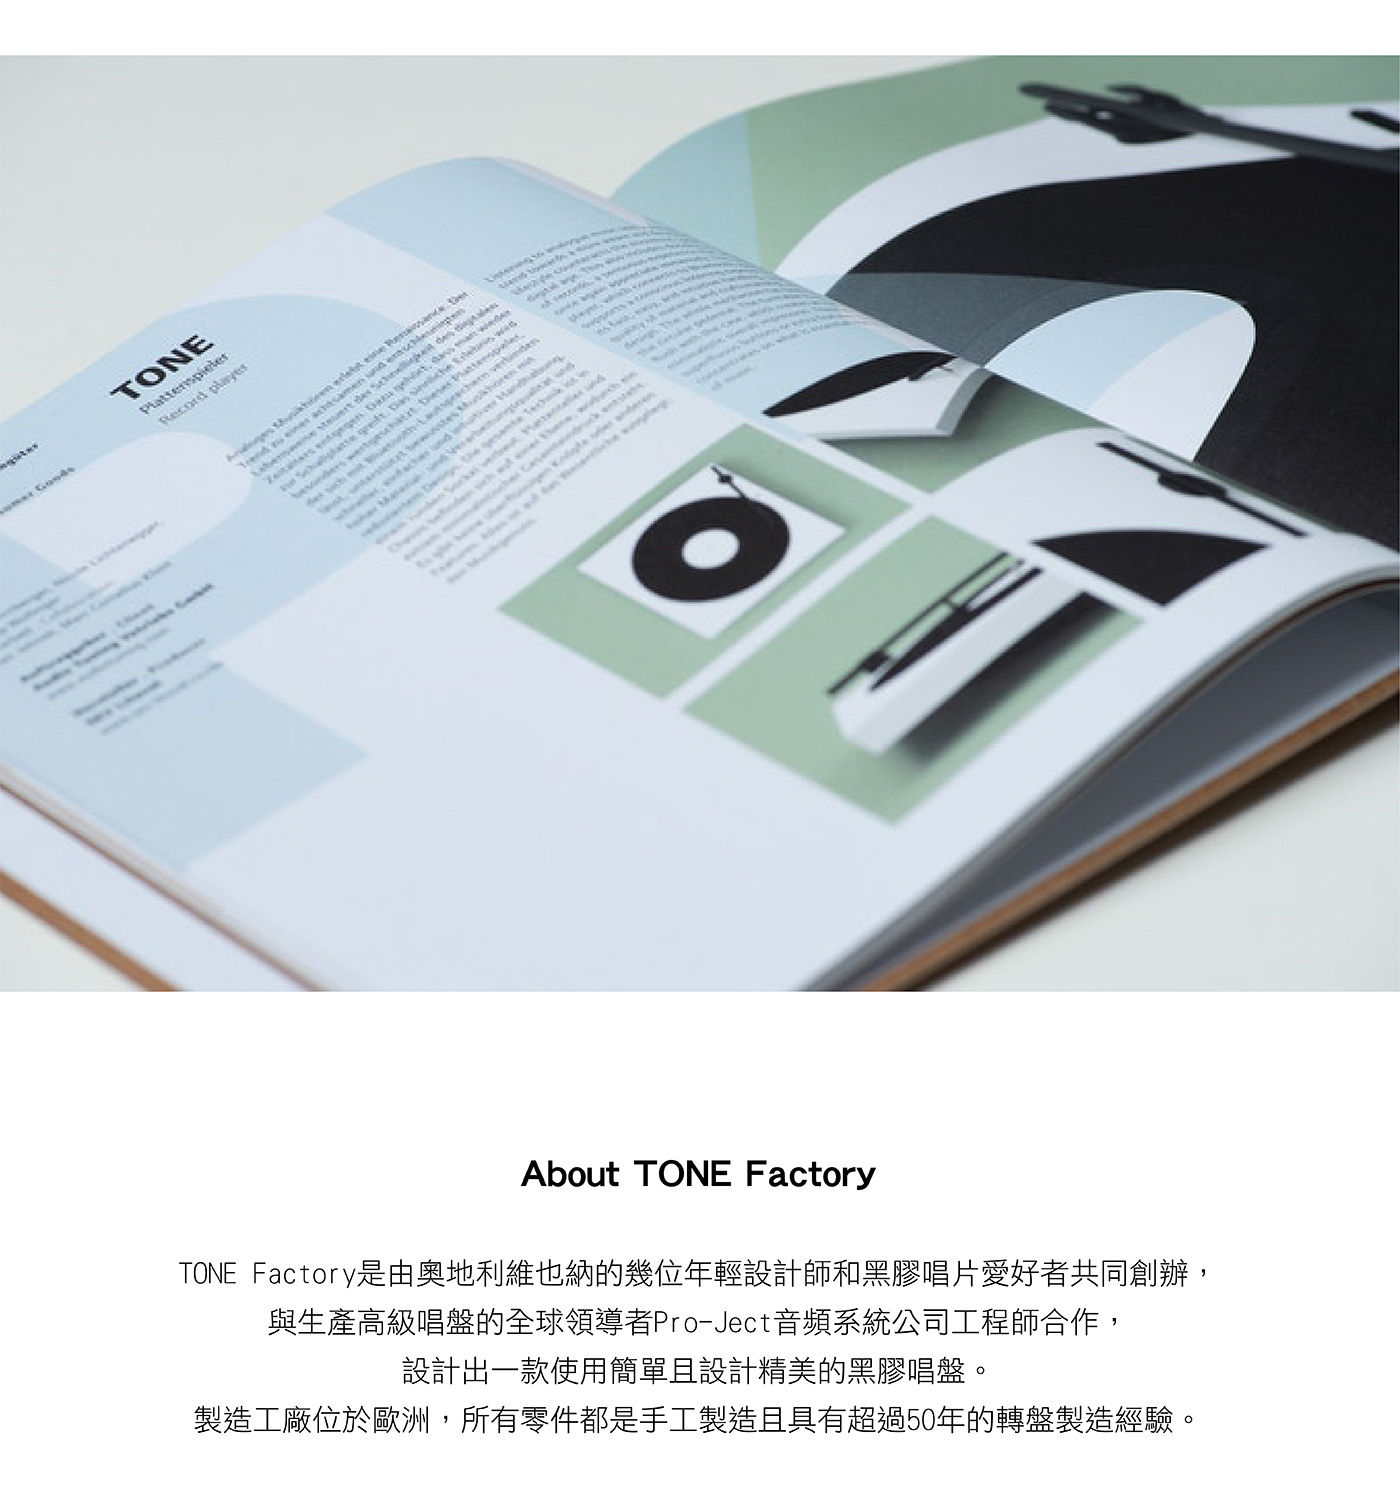 TONE Factory 藍牙黑膠唱盤 含防塵蓋ortofon x Pro-Ject 頂尖大廠技術合作